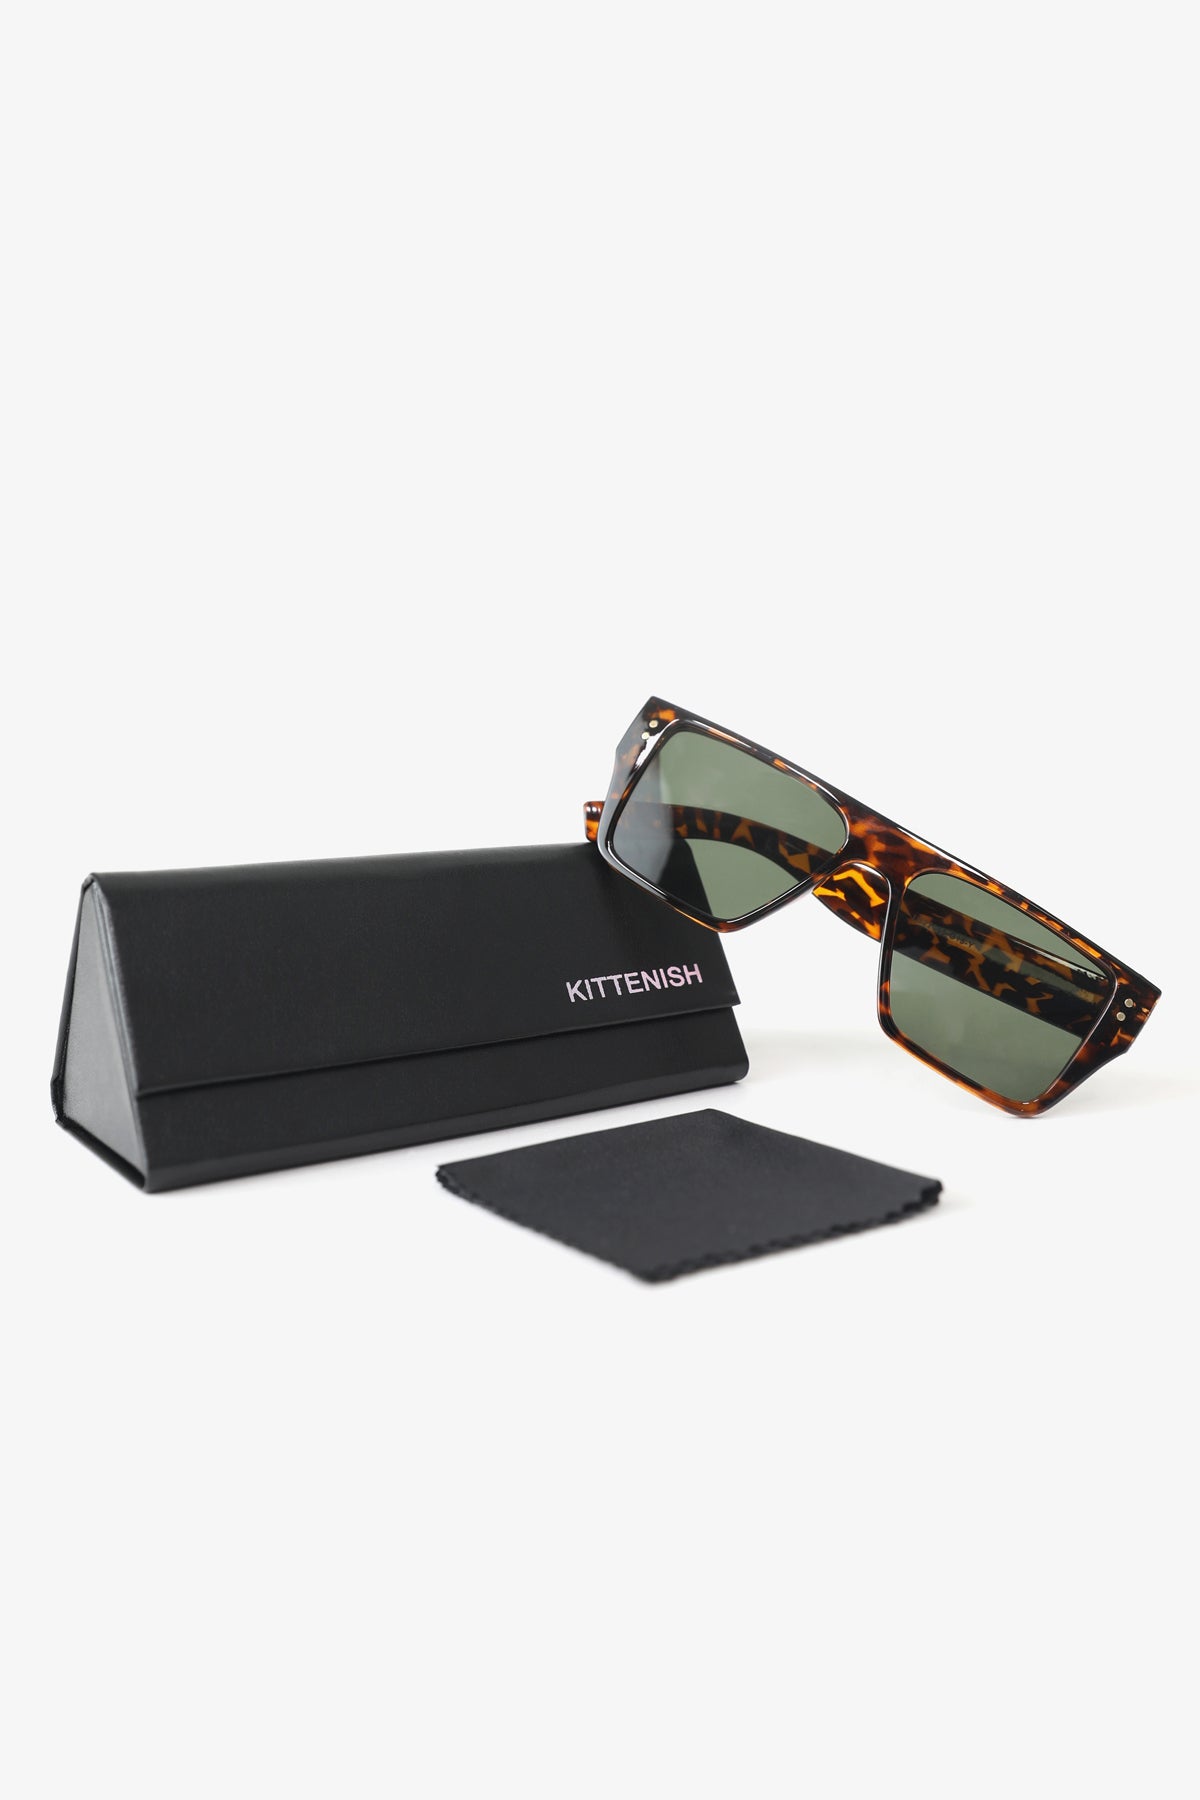 The MK Tortoise square frame sunglasses, Kittenish case, and wipe cloth.